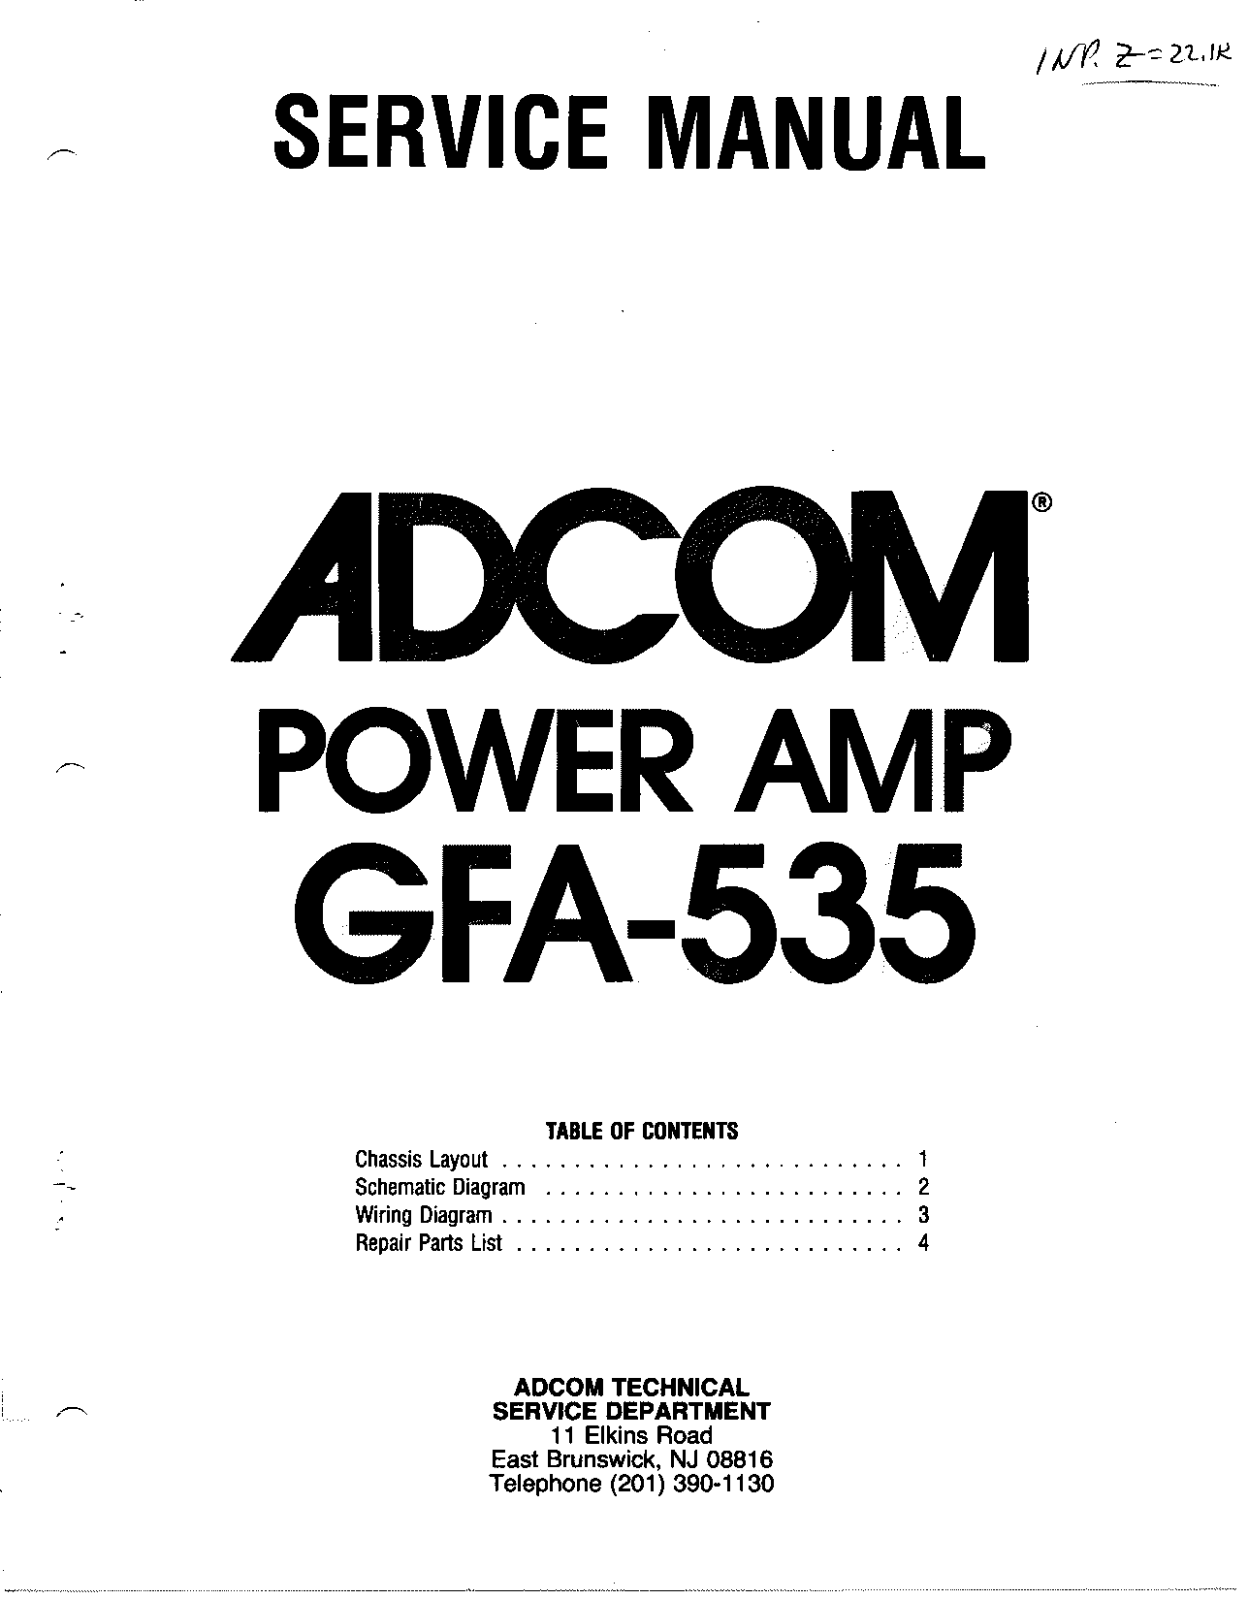 Adcom GFA-535 Service manual